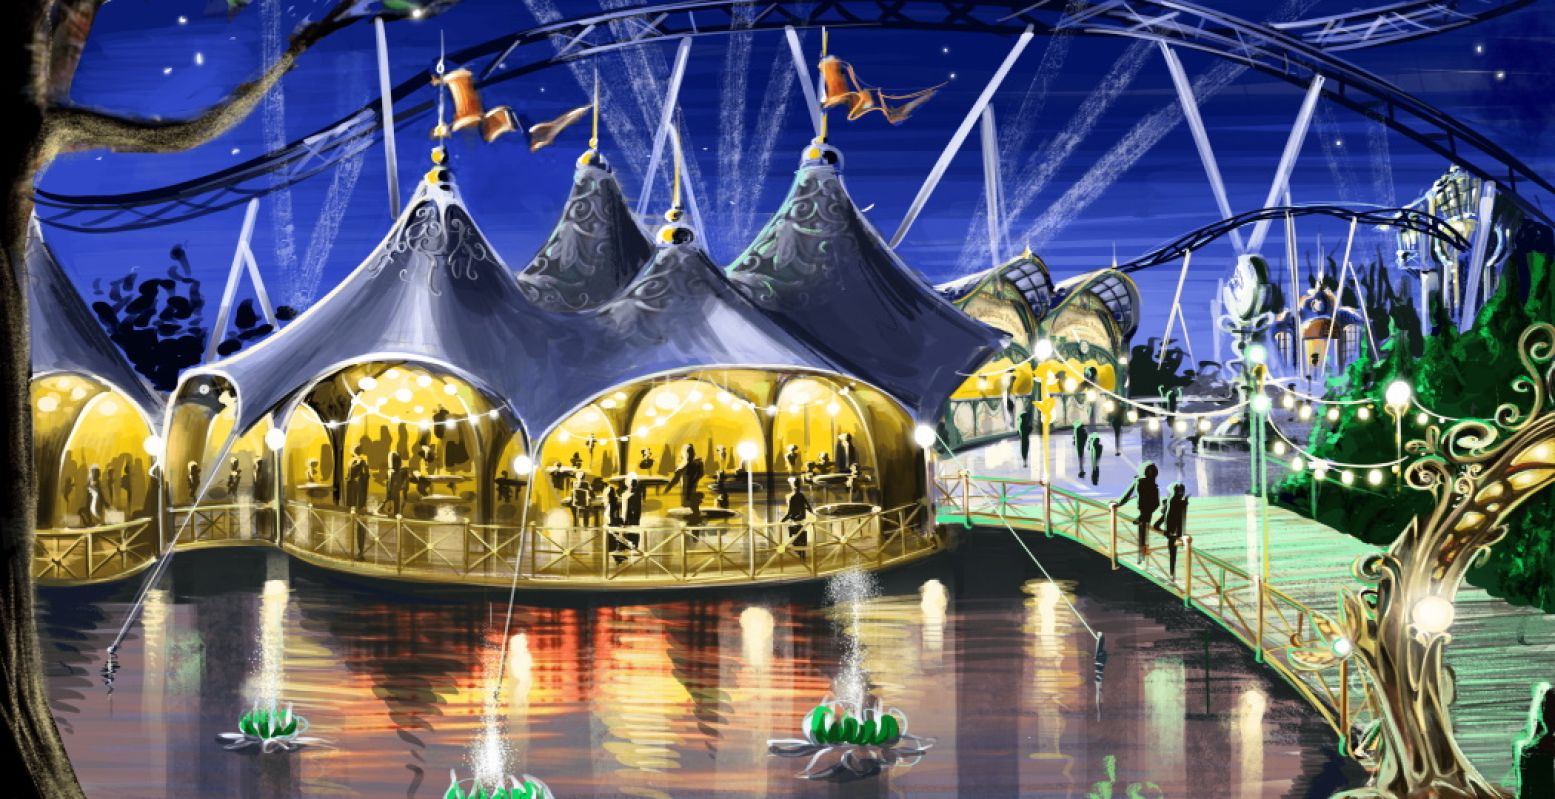 Impressie van The Ride to Happiness by Tomorrowland. Foto: Plopsaland de Panne